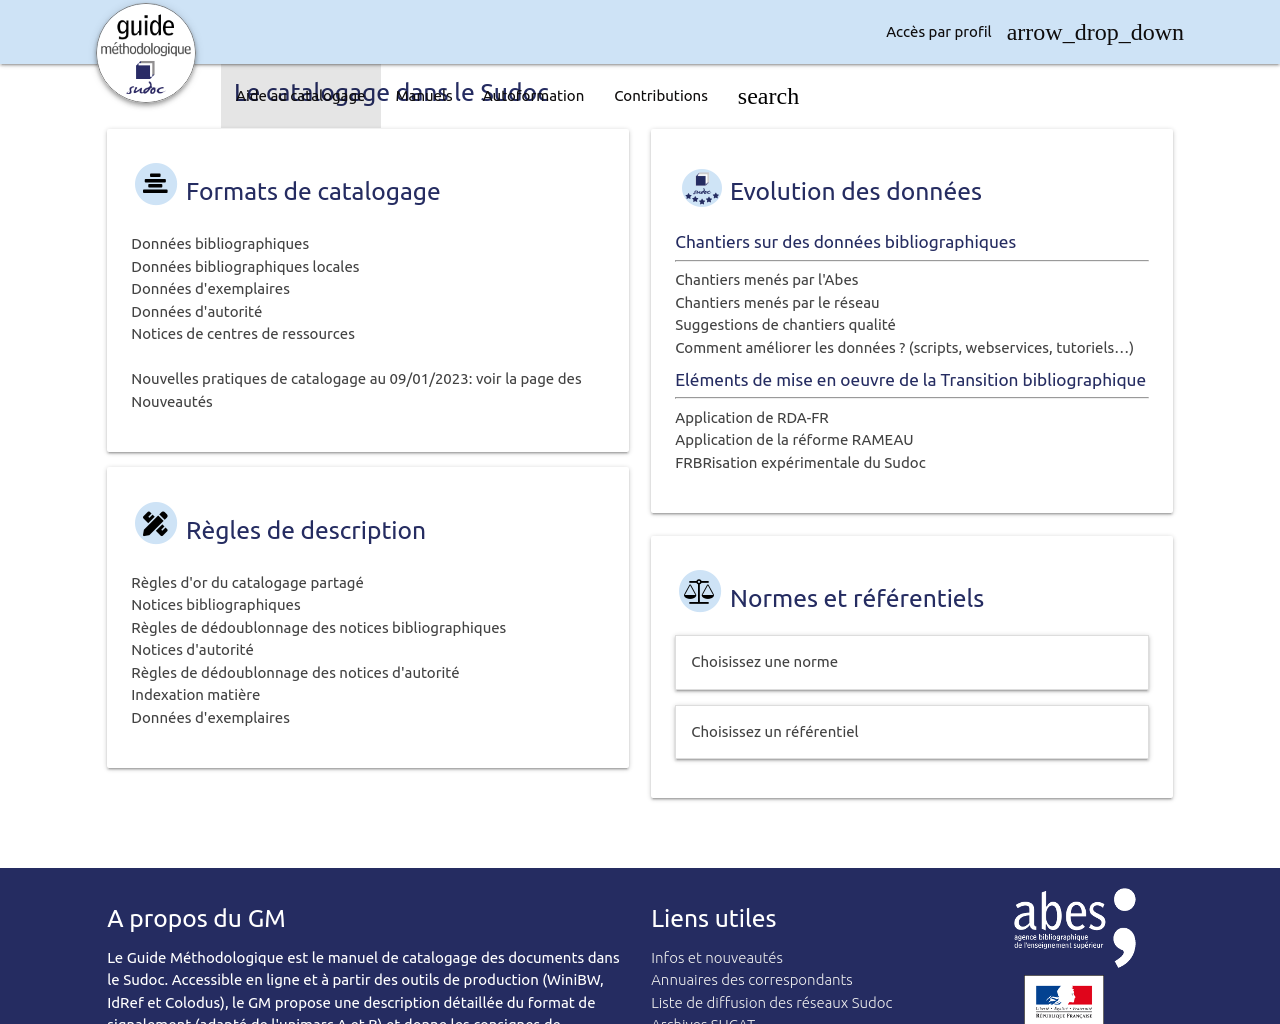 documentation.abes.fr